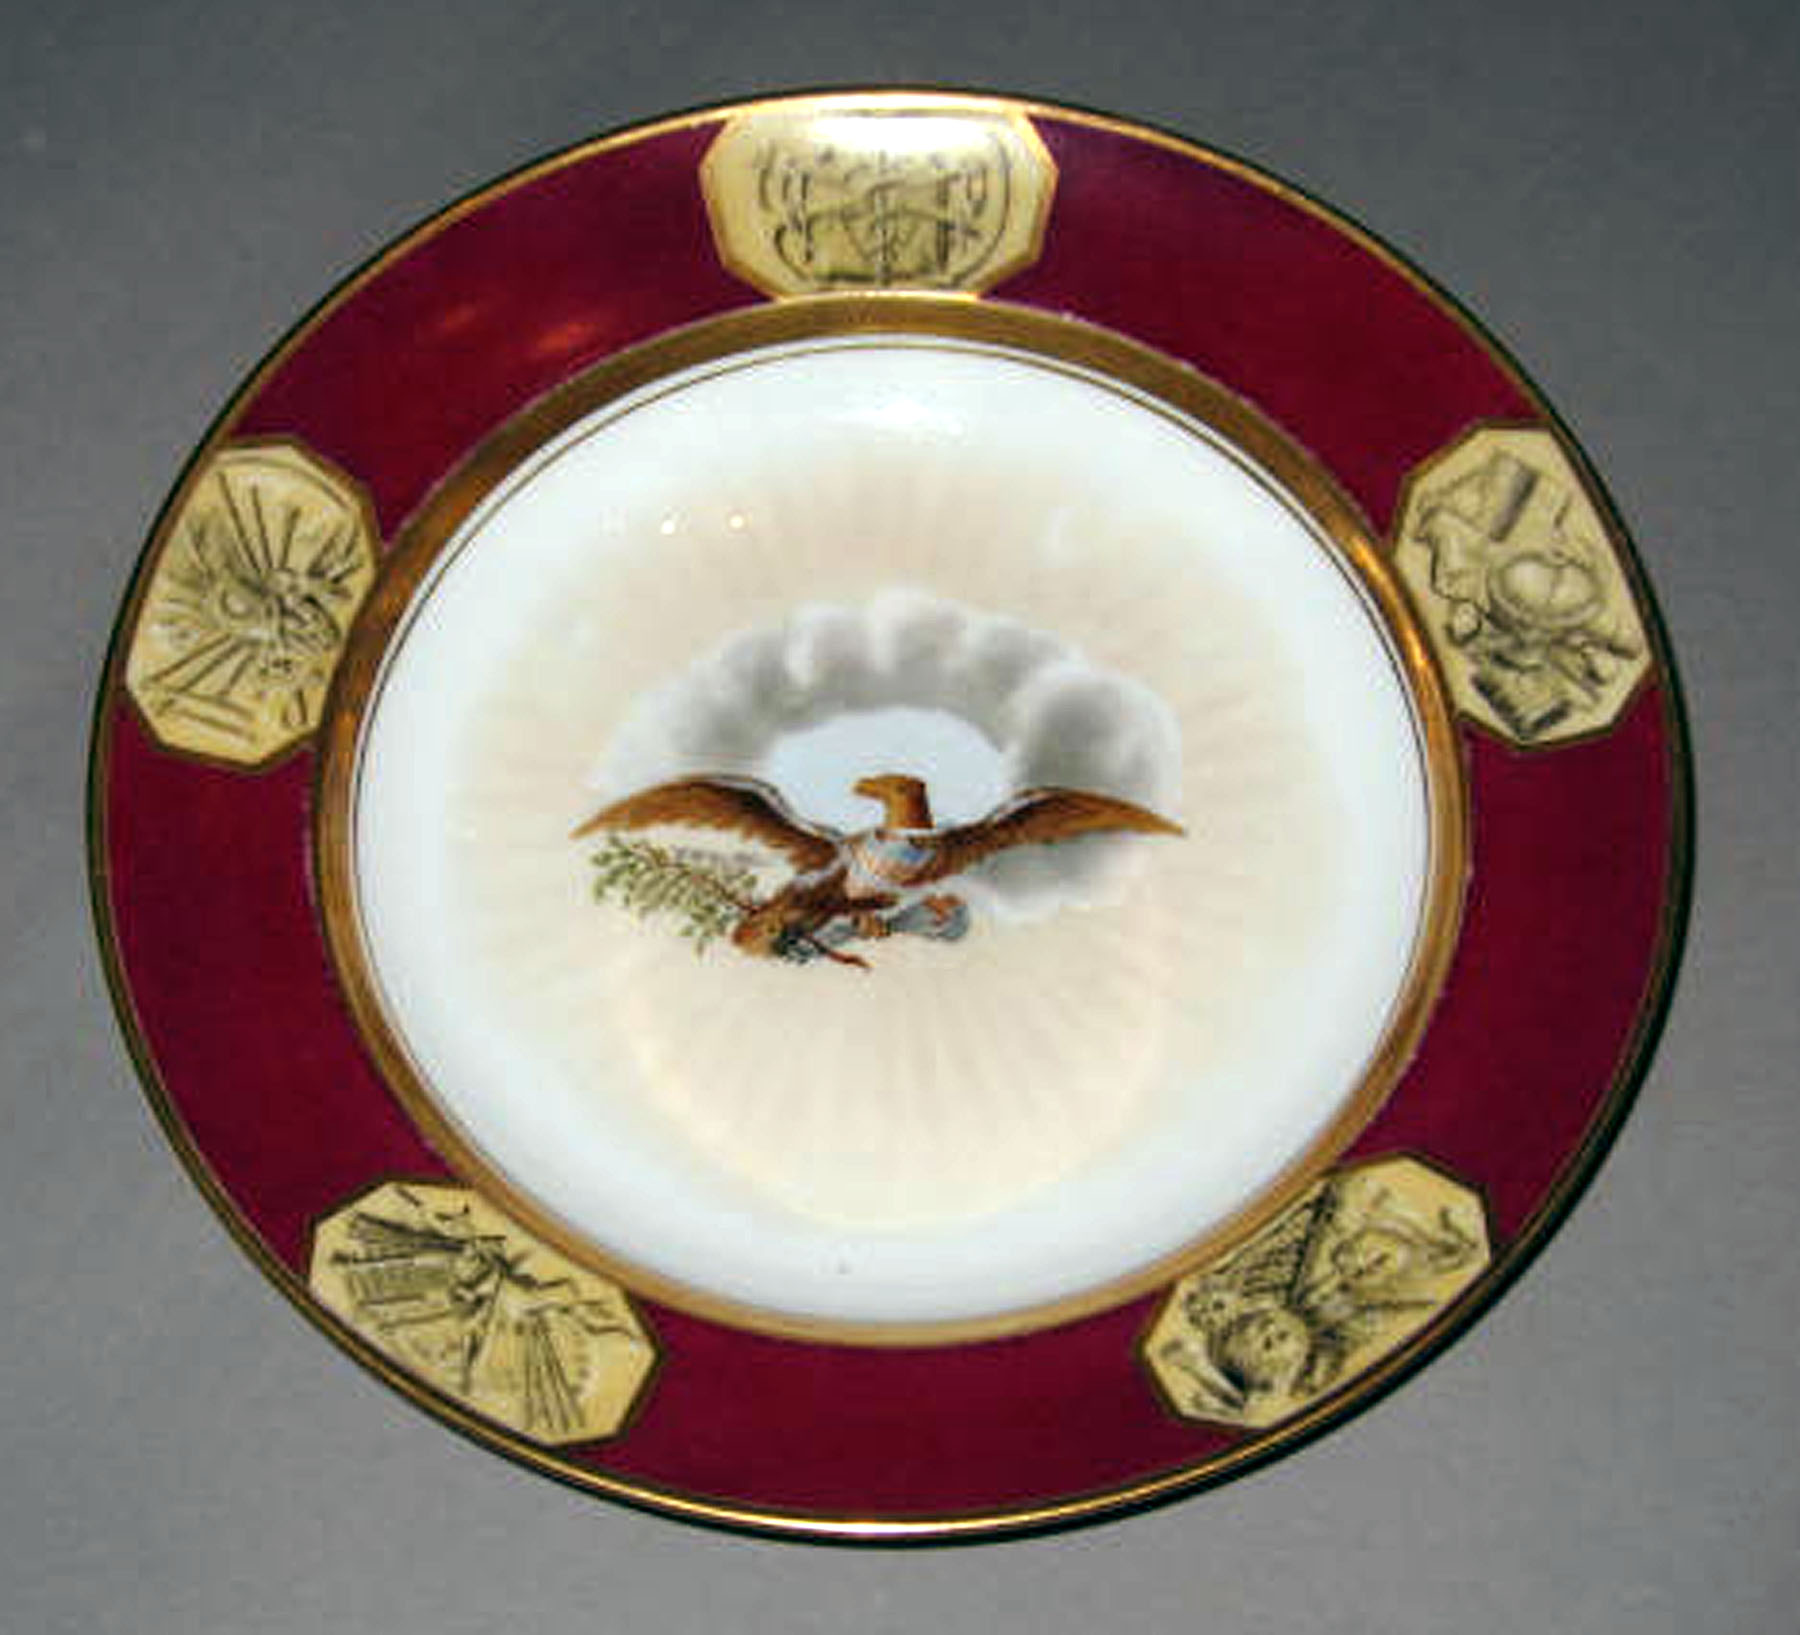 1958.1606.043 Porcelain dessert plate